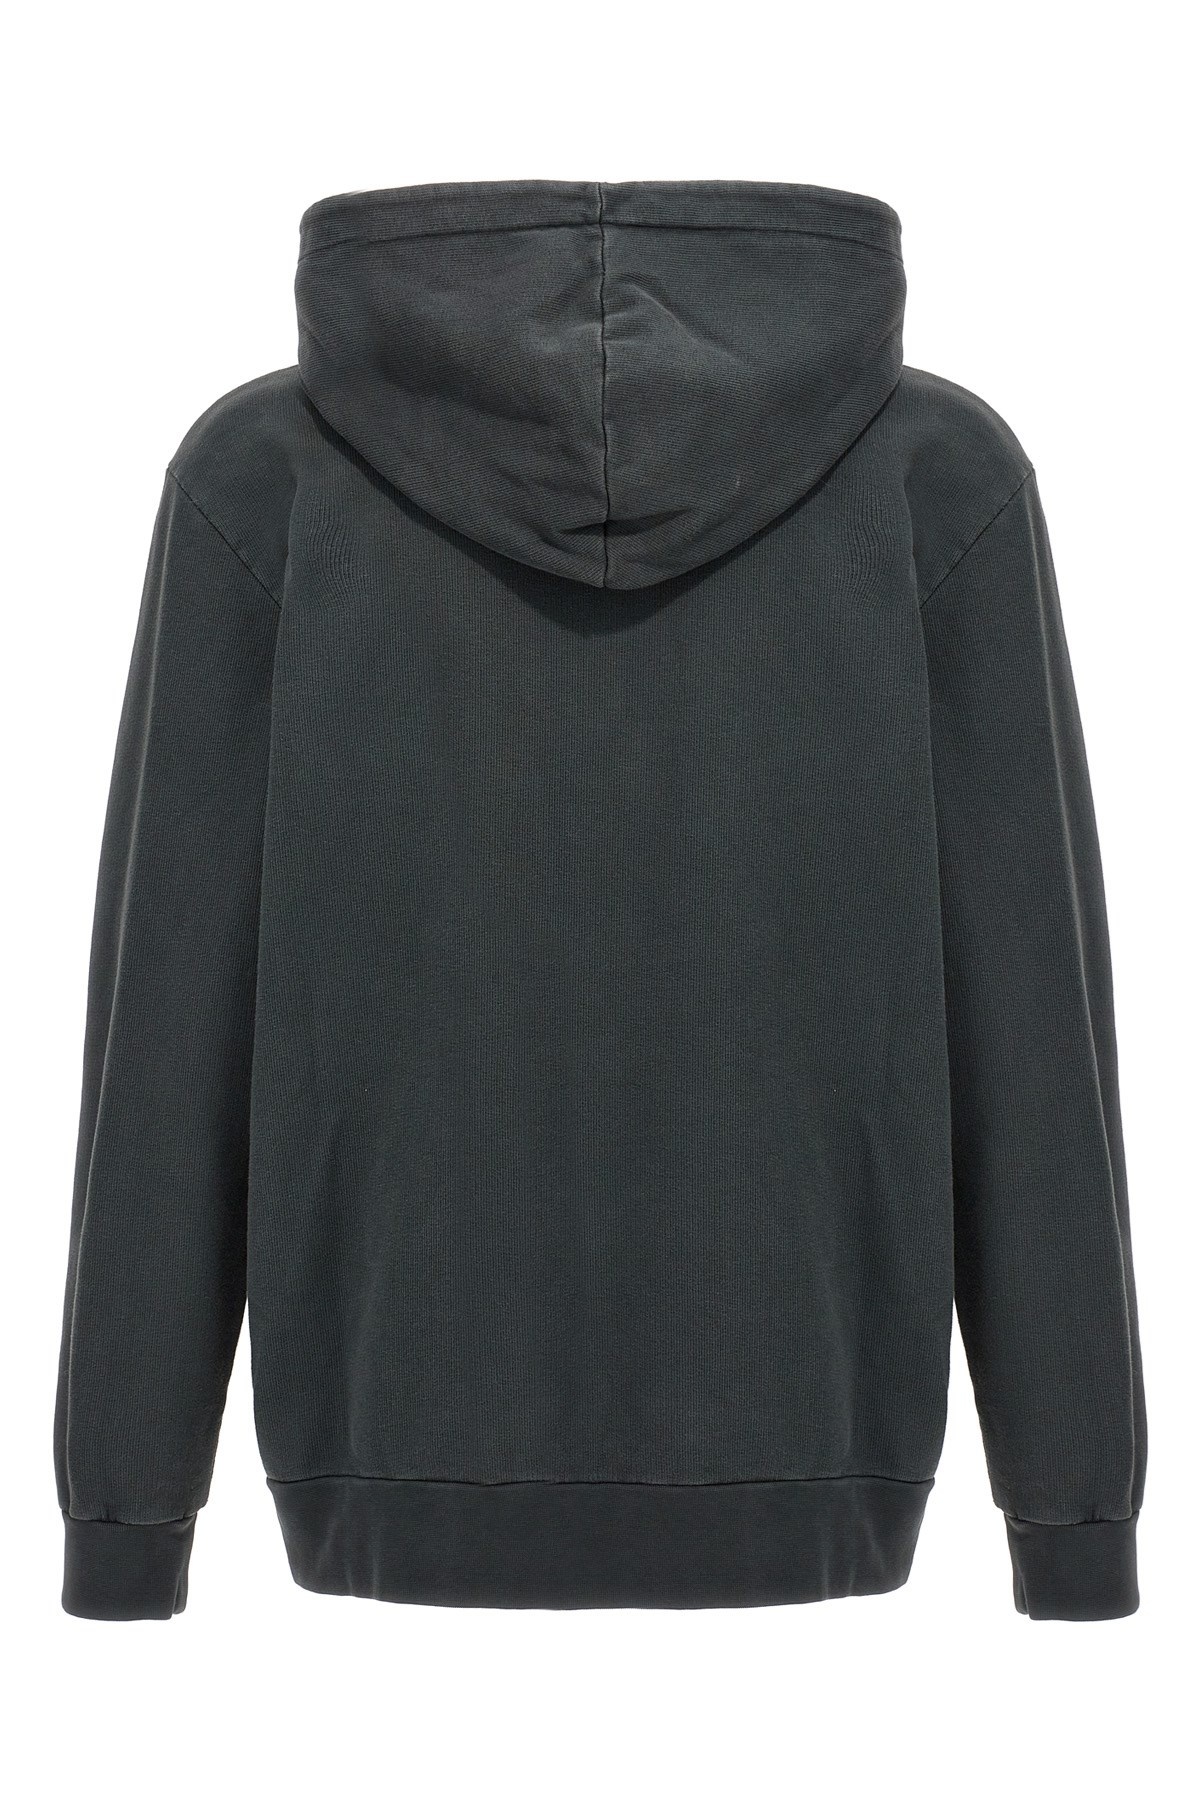 'PA City' hoodie - 3